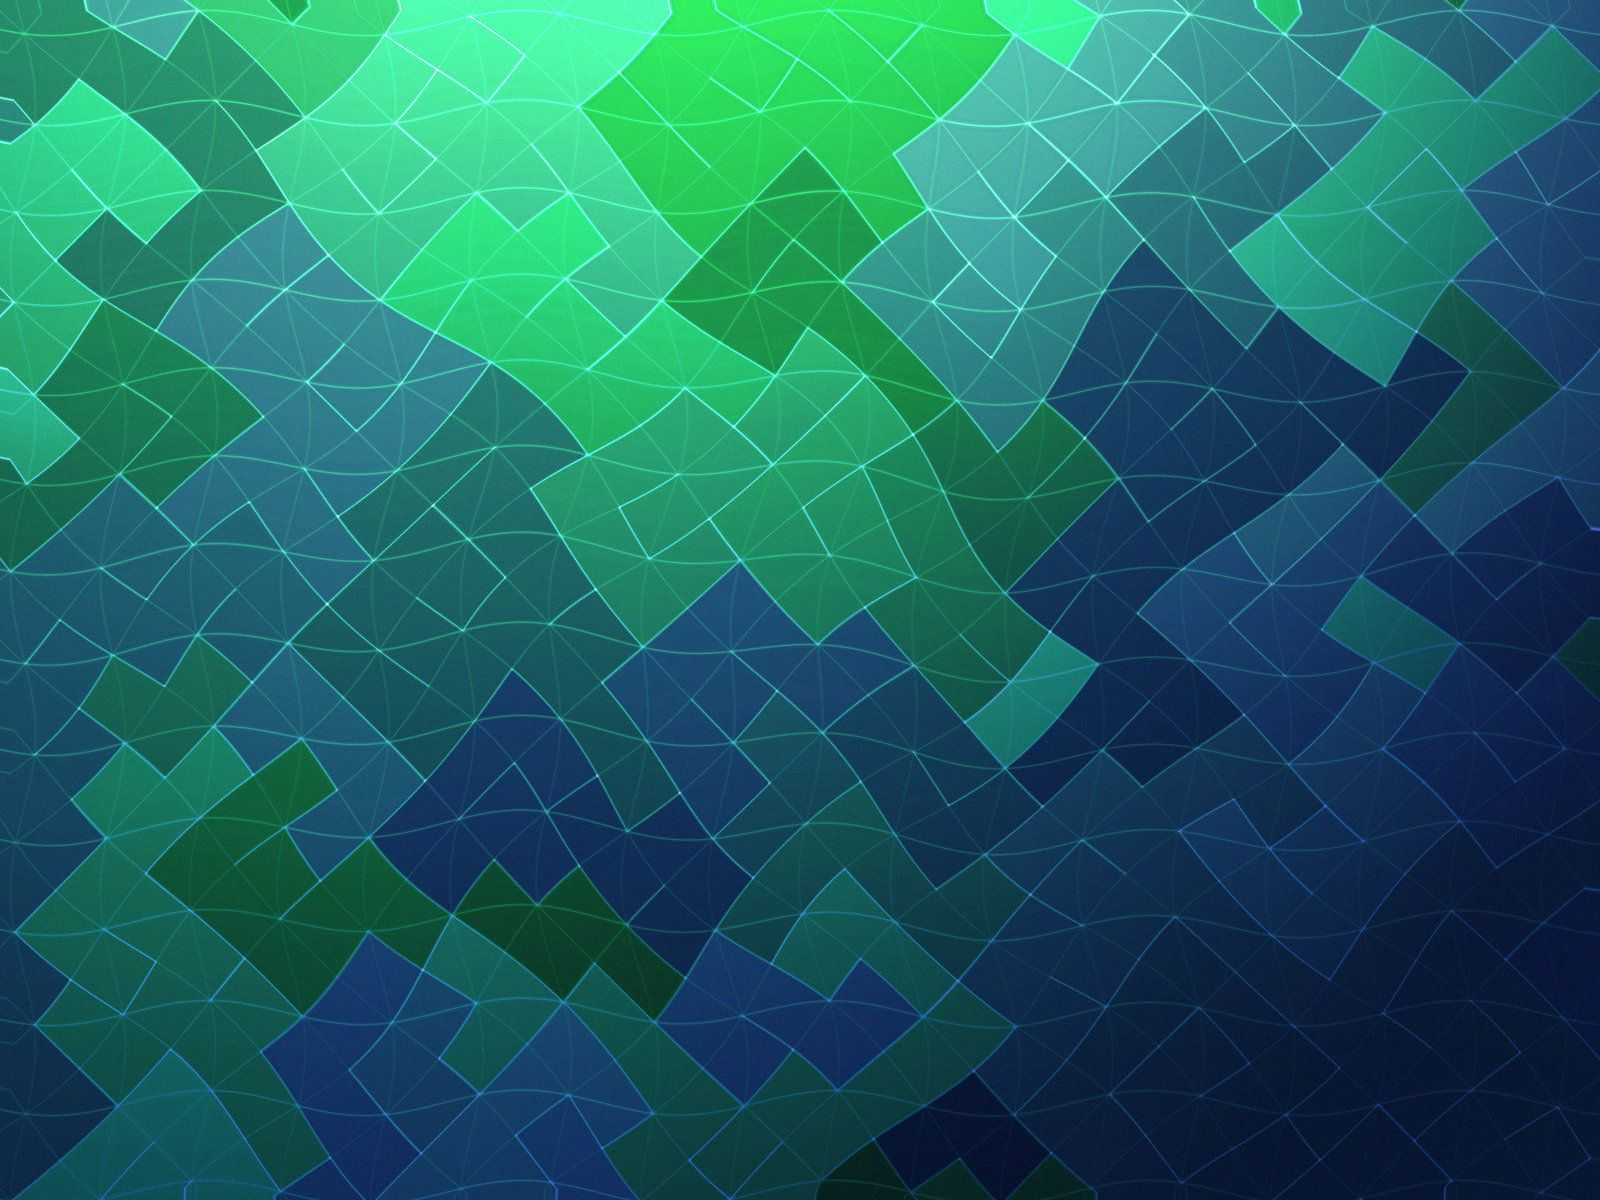 nexus 5x stock wallpaper,green,blue,pattern,design,illustration